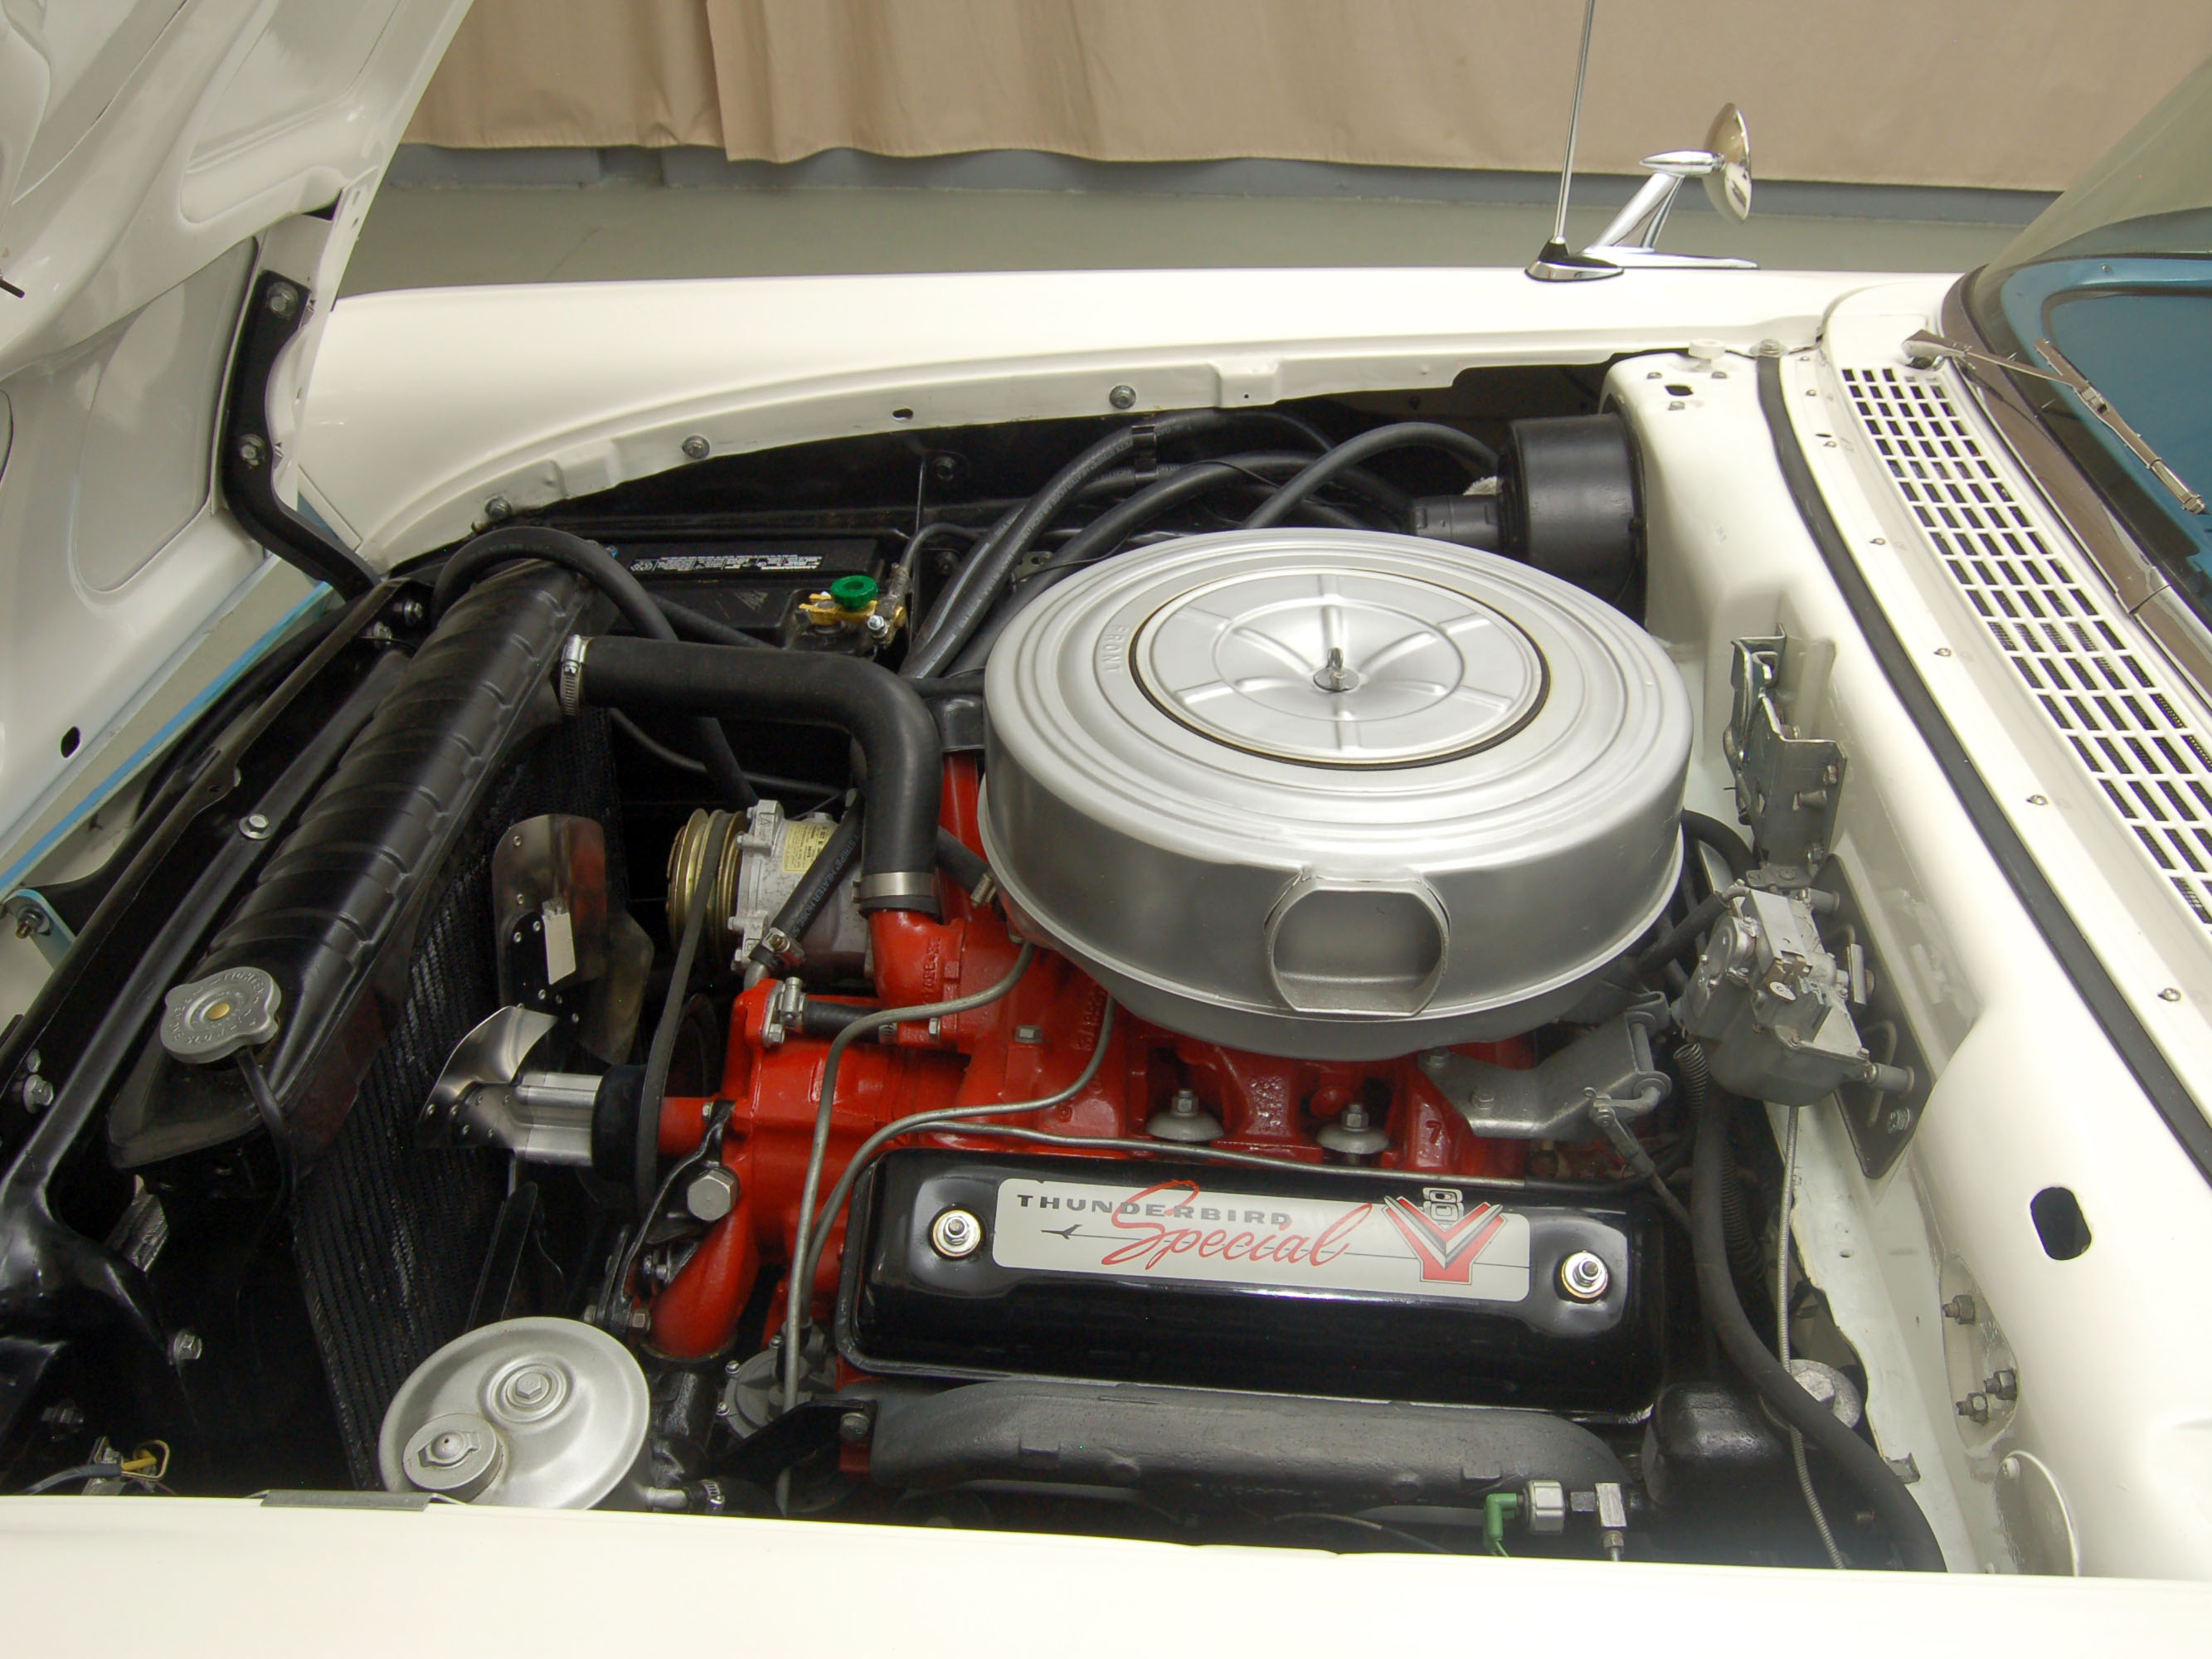 1959 ford ranchero custom